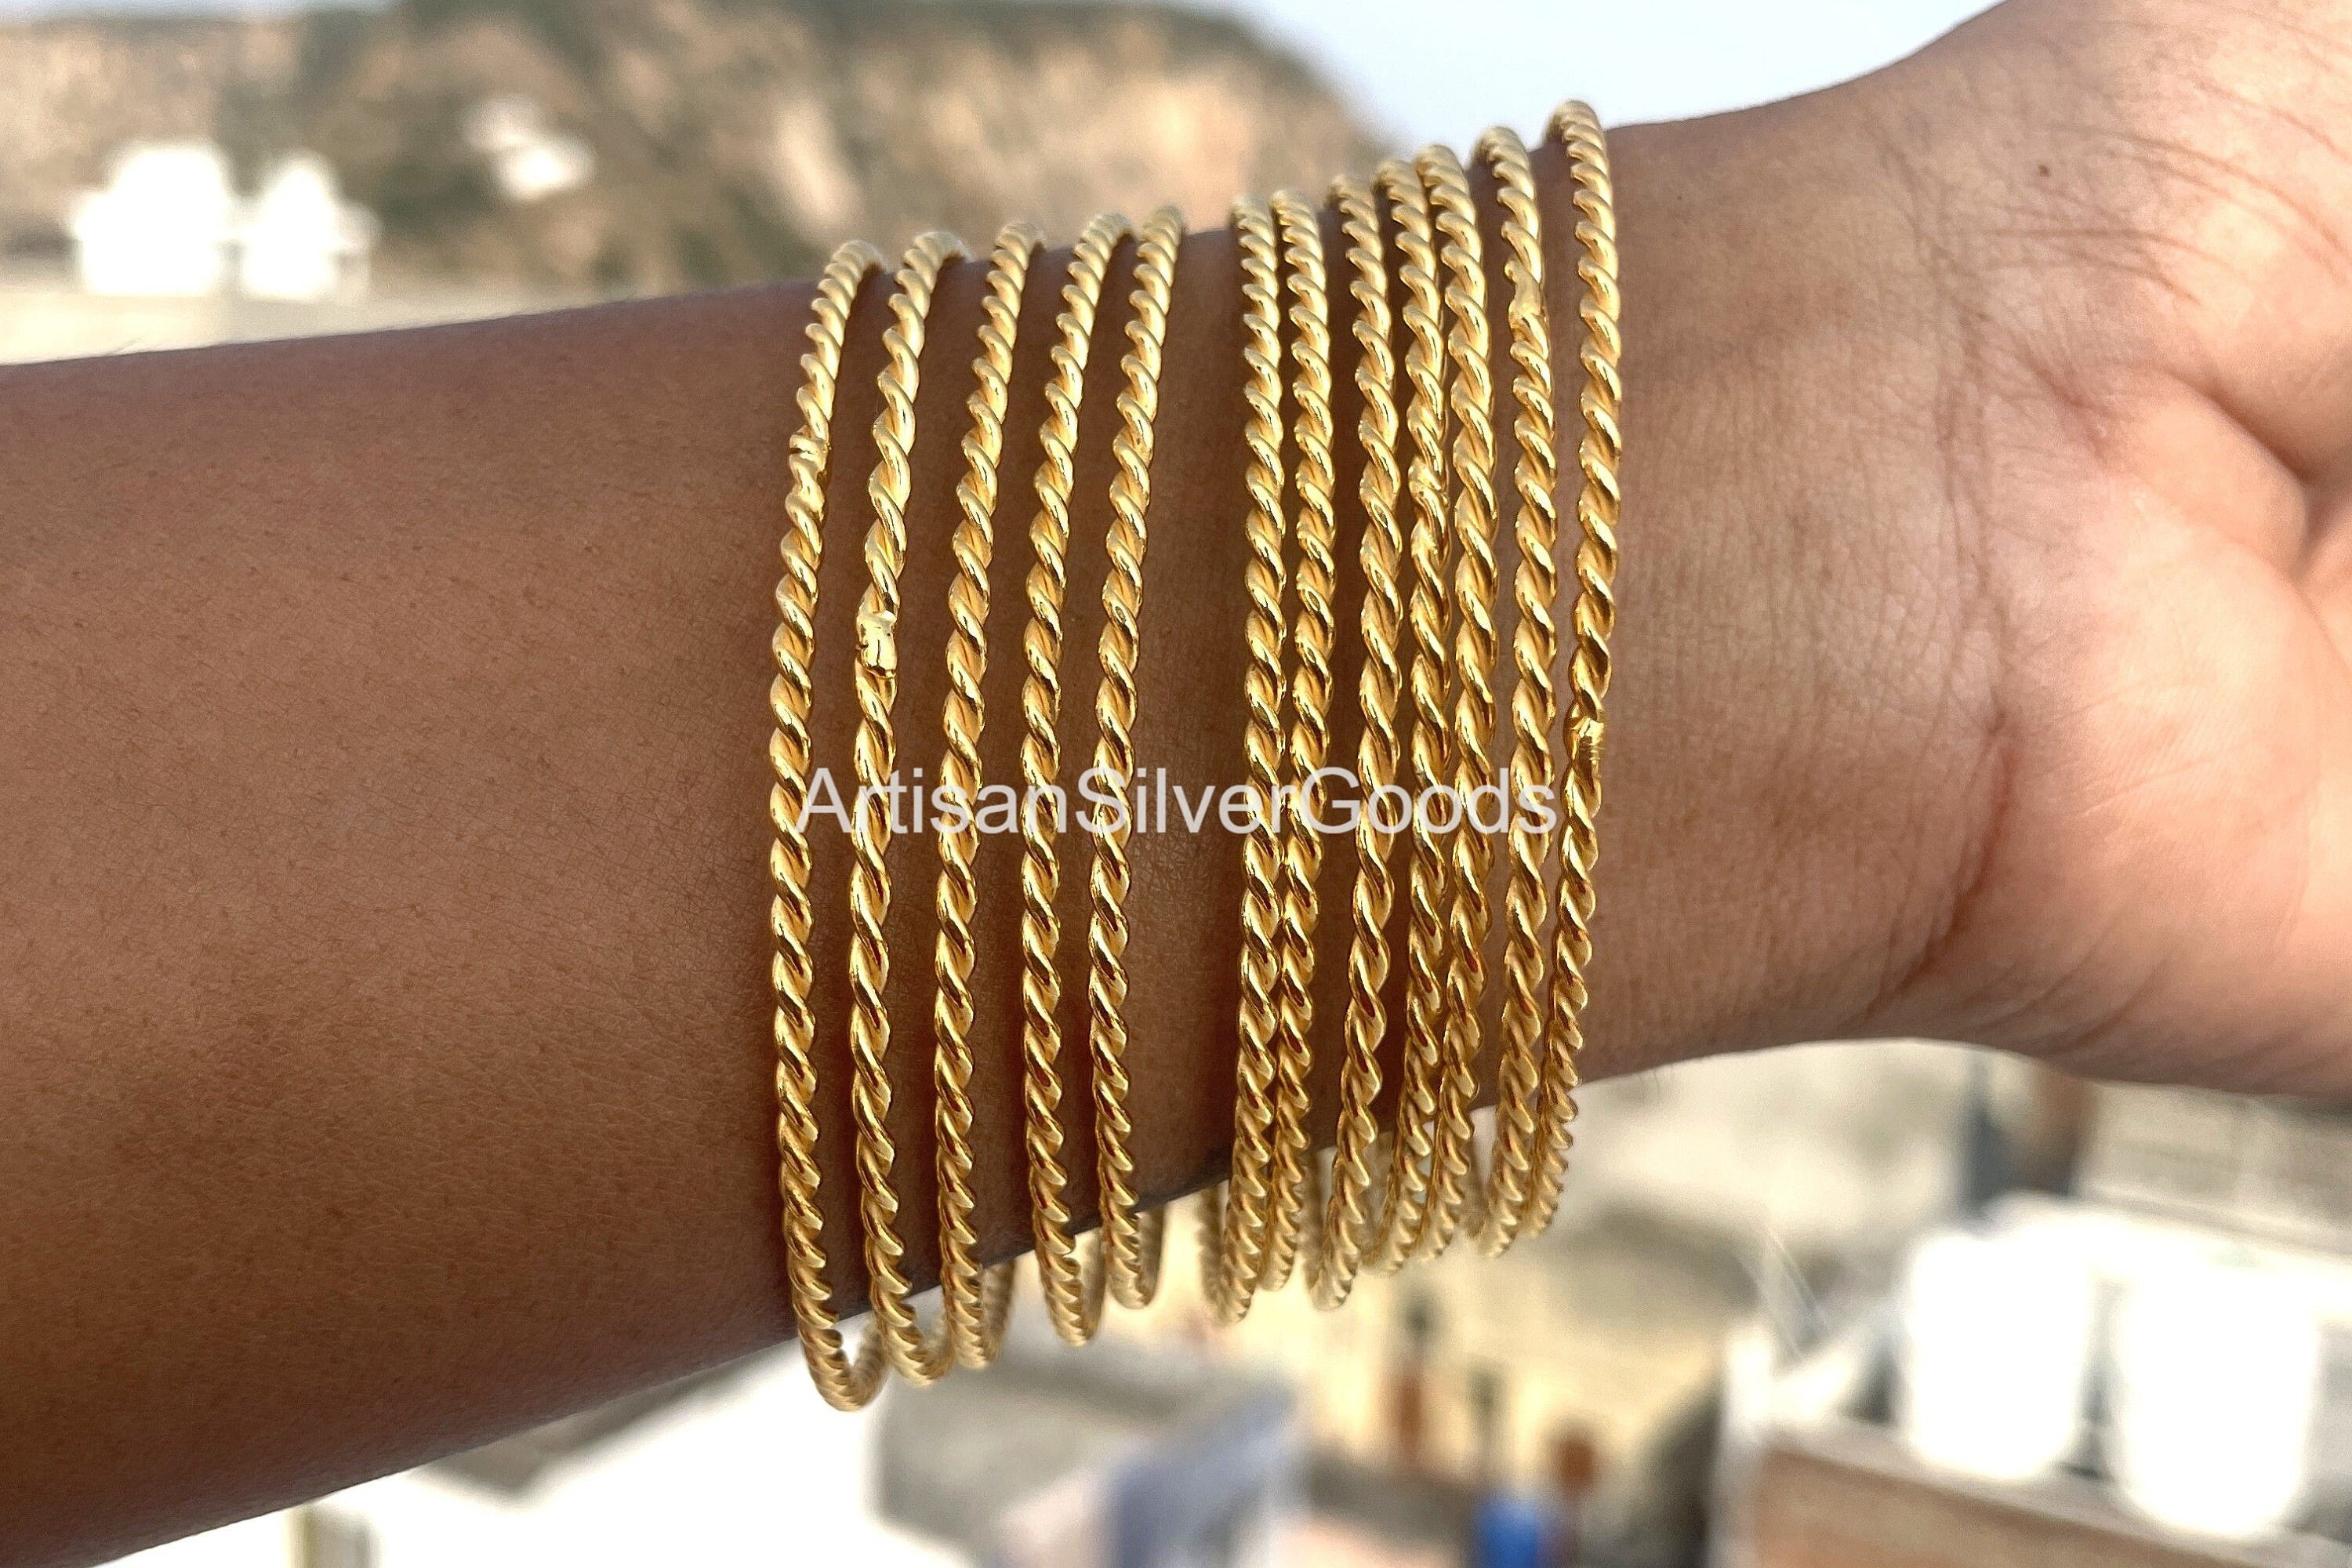 Buy Pura Vida Rose Gold Malibu Black Bracelet - Waterproof, Artisan Handmade,  Adjustable, Threaded, Fashion Jewelry for Girls/Women Online at Lowest  Price Ever in India | Check Reviews & Ratings - Shop